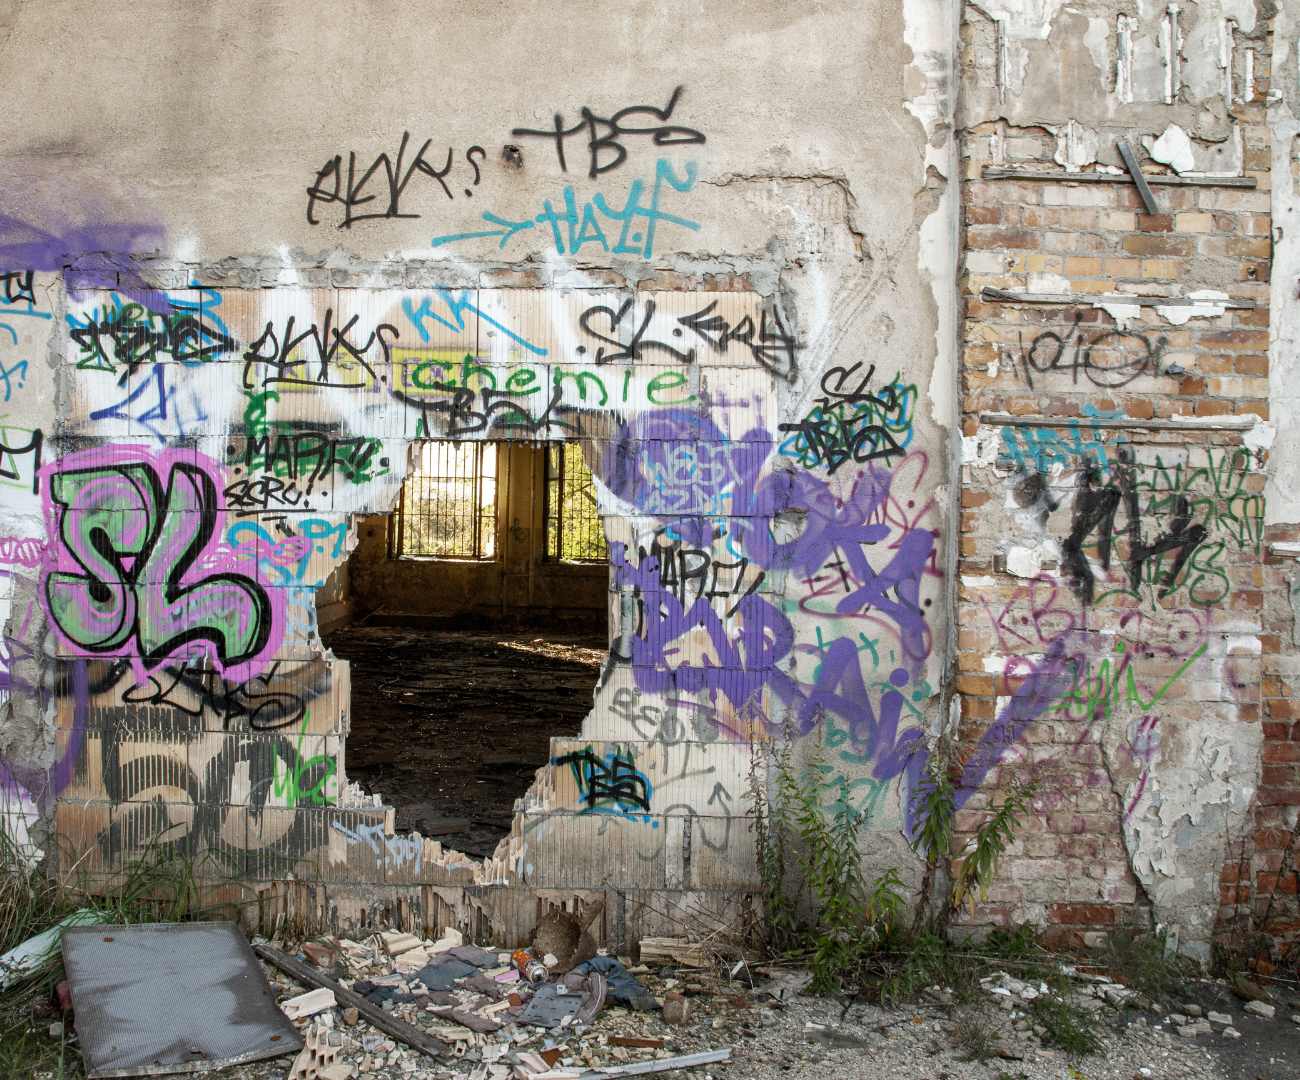 Graffiti and rubbish by wall